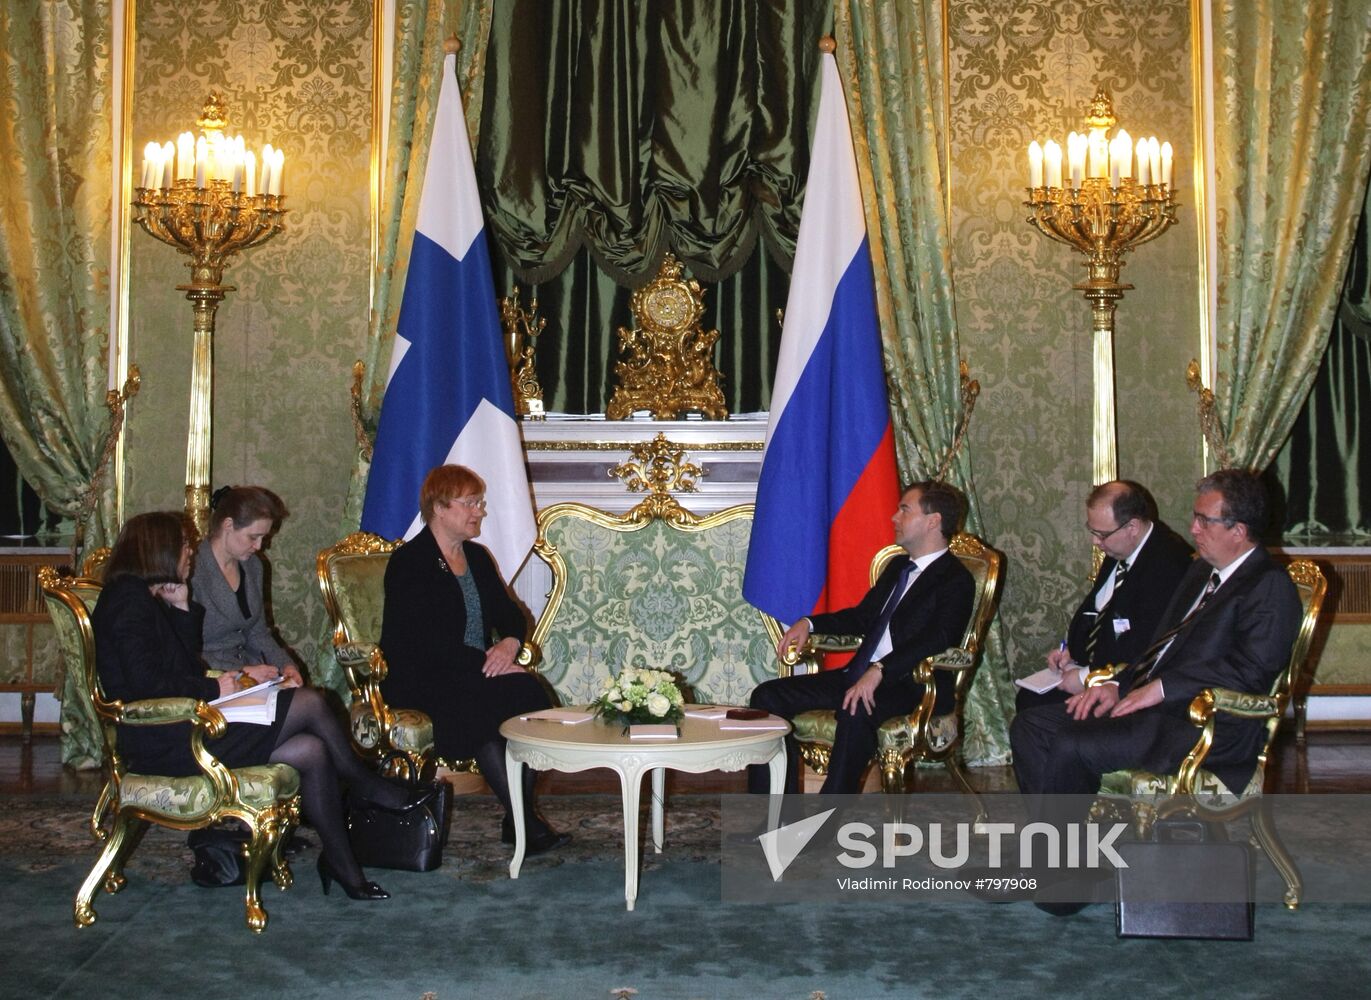 Finnish President Tarja Halonen visits Russia